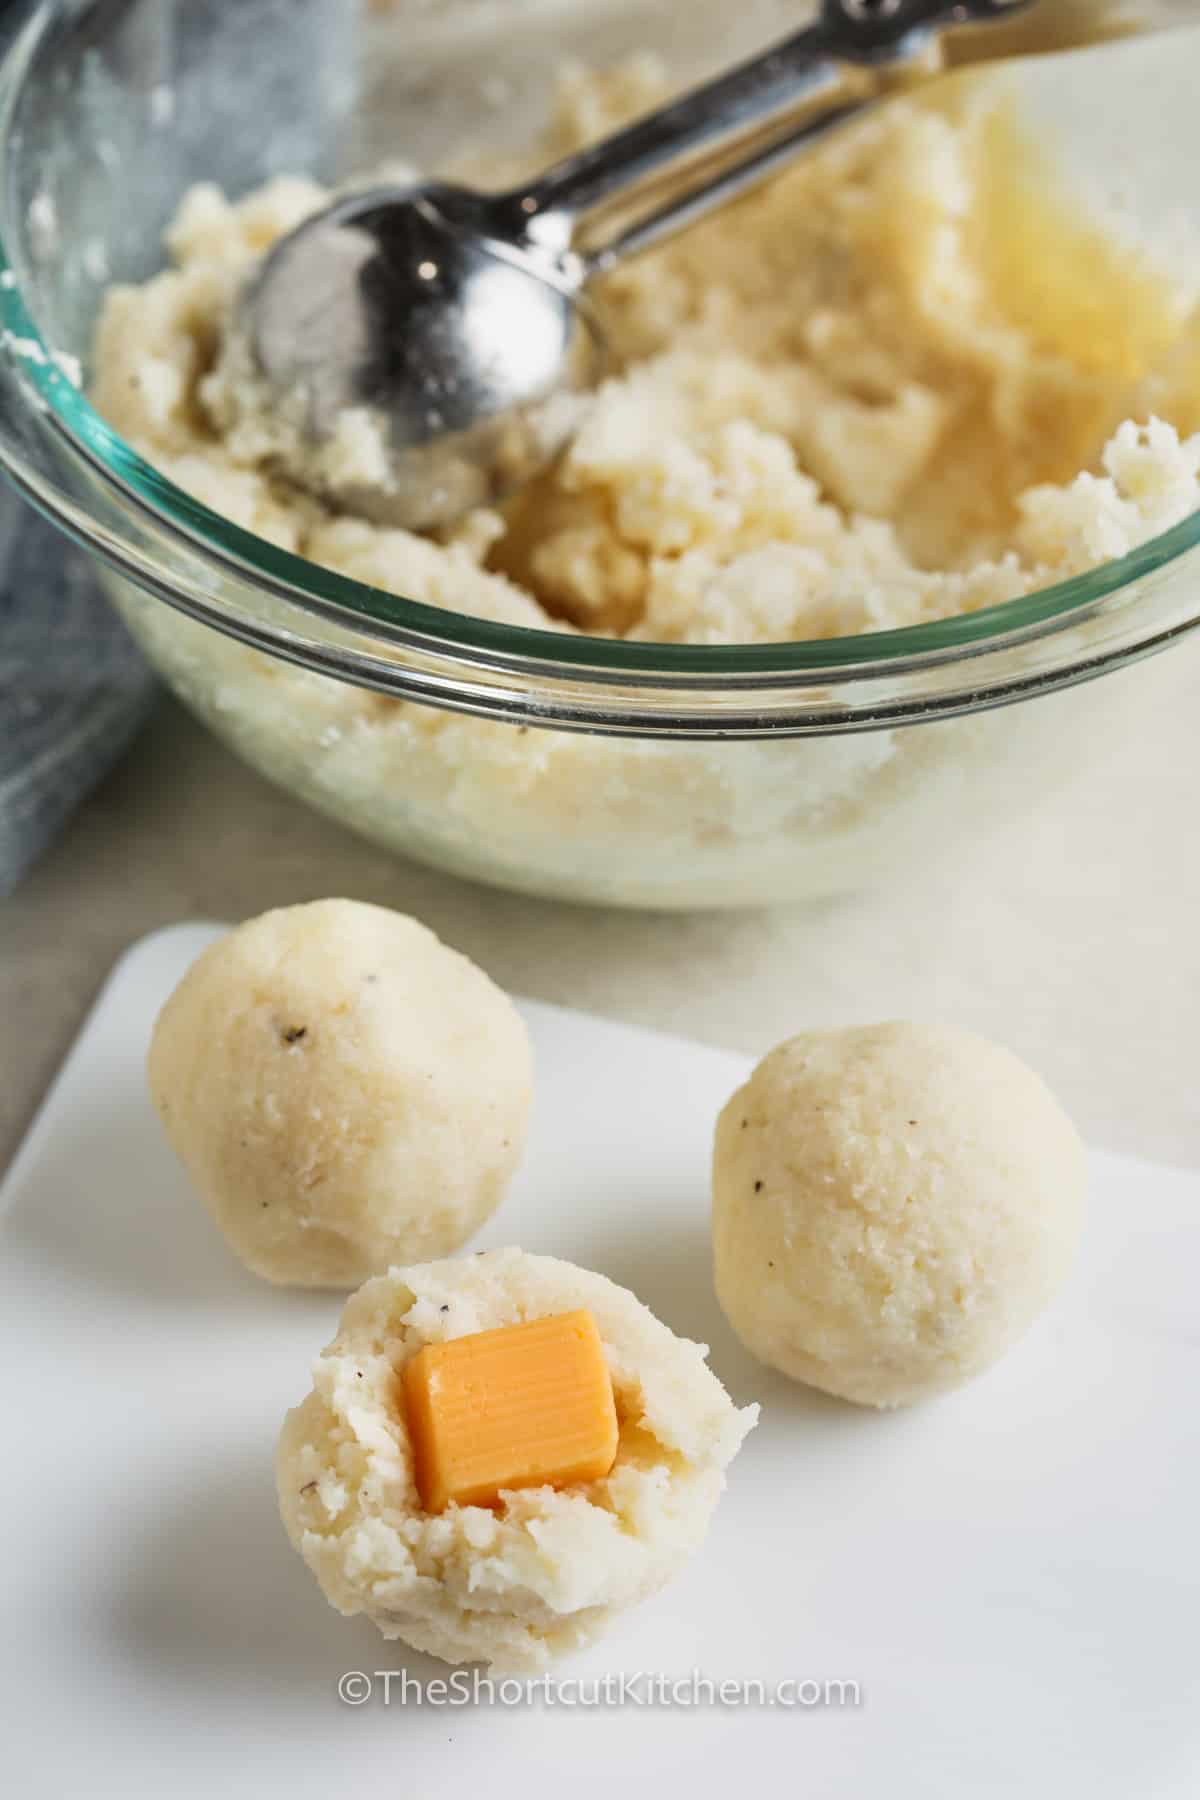 adding cheese to mashed potatoes to make Fried Mashed Potato Balls